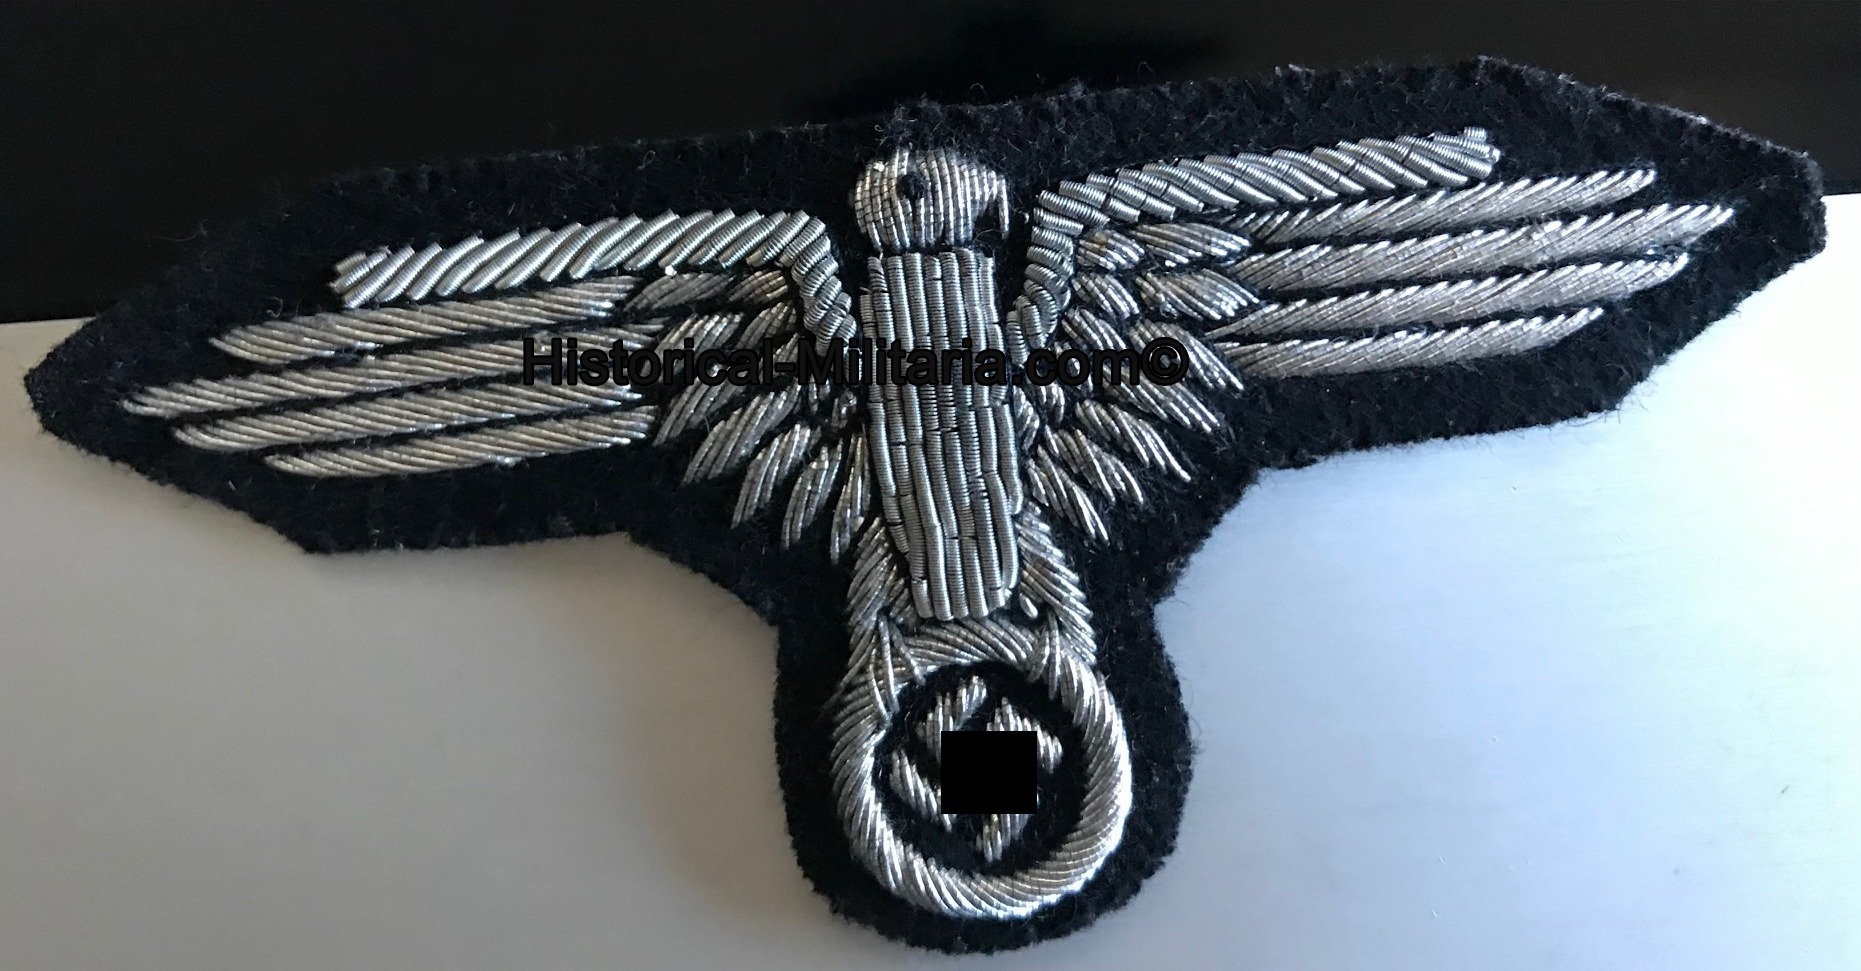 Waffen-SS Officer sleeve eagle in aged tarnished silver - Offiziersadler Ärmeladler Elite Waffen-SS silber gealtert - Aquila da braccio Ufficiale delle Waffen-SS iargento invecchiata